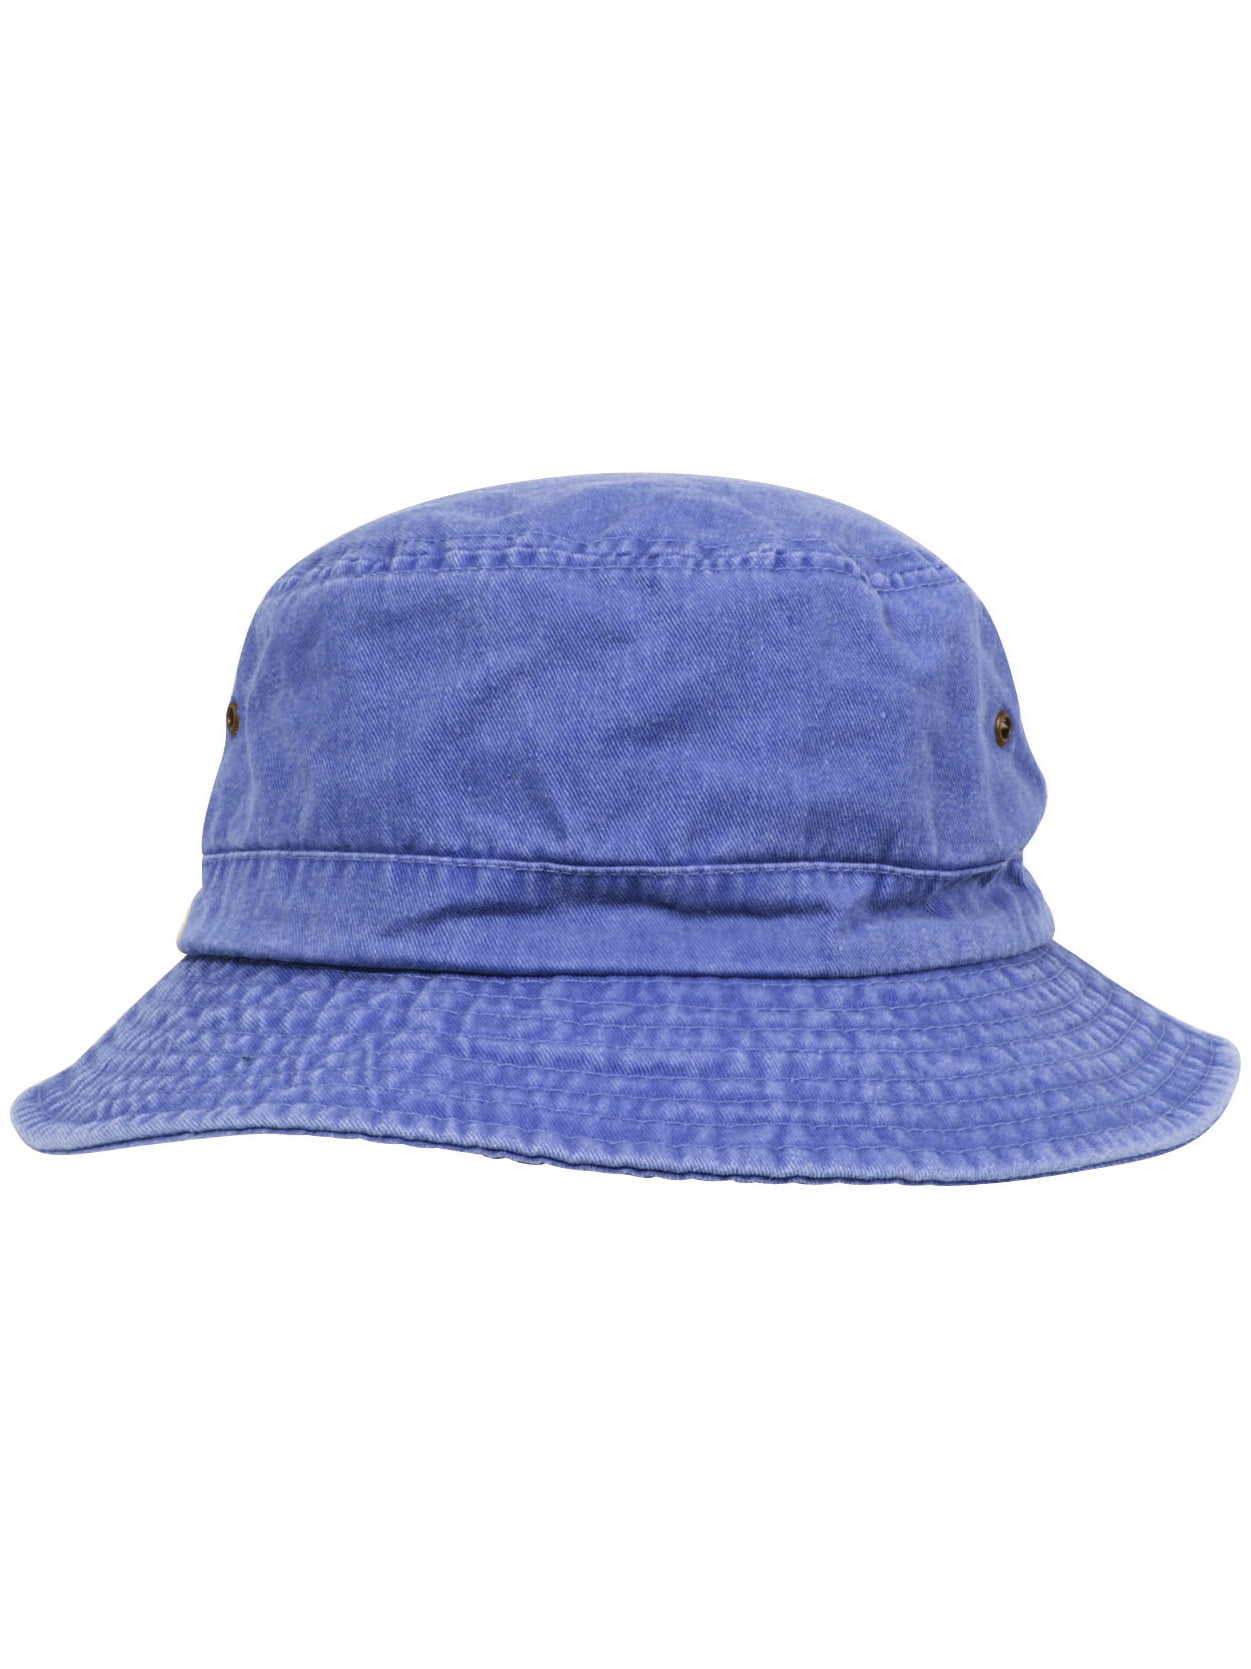 Top Headwear Washed Design Bucket Hat, Royal S/M